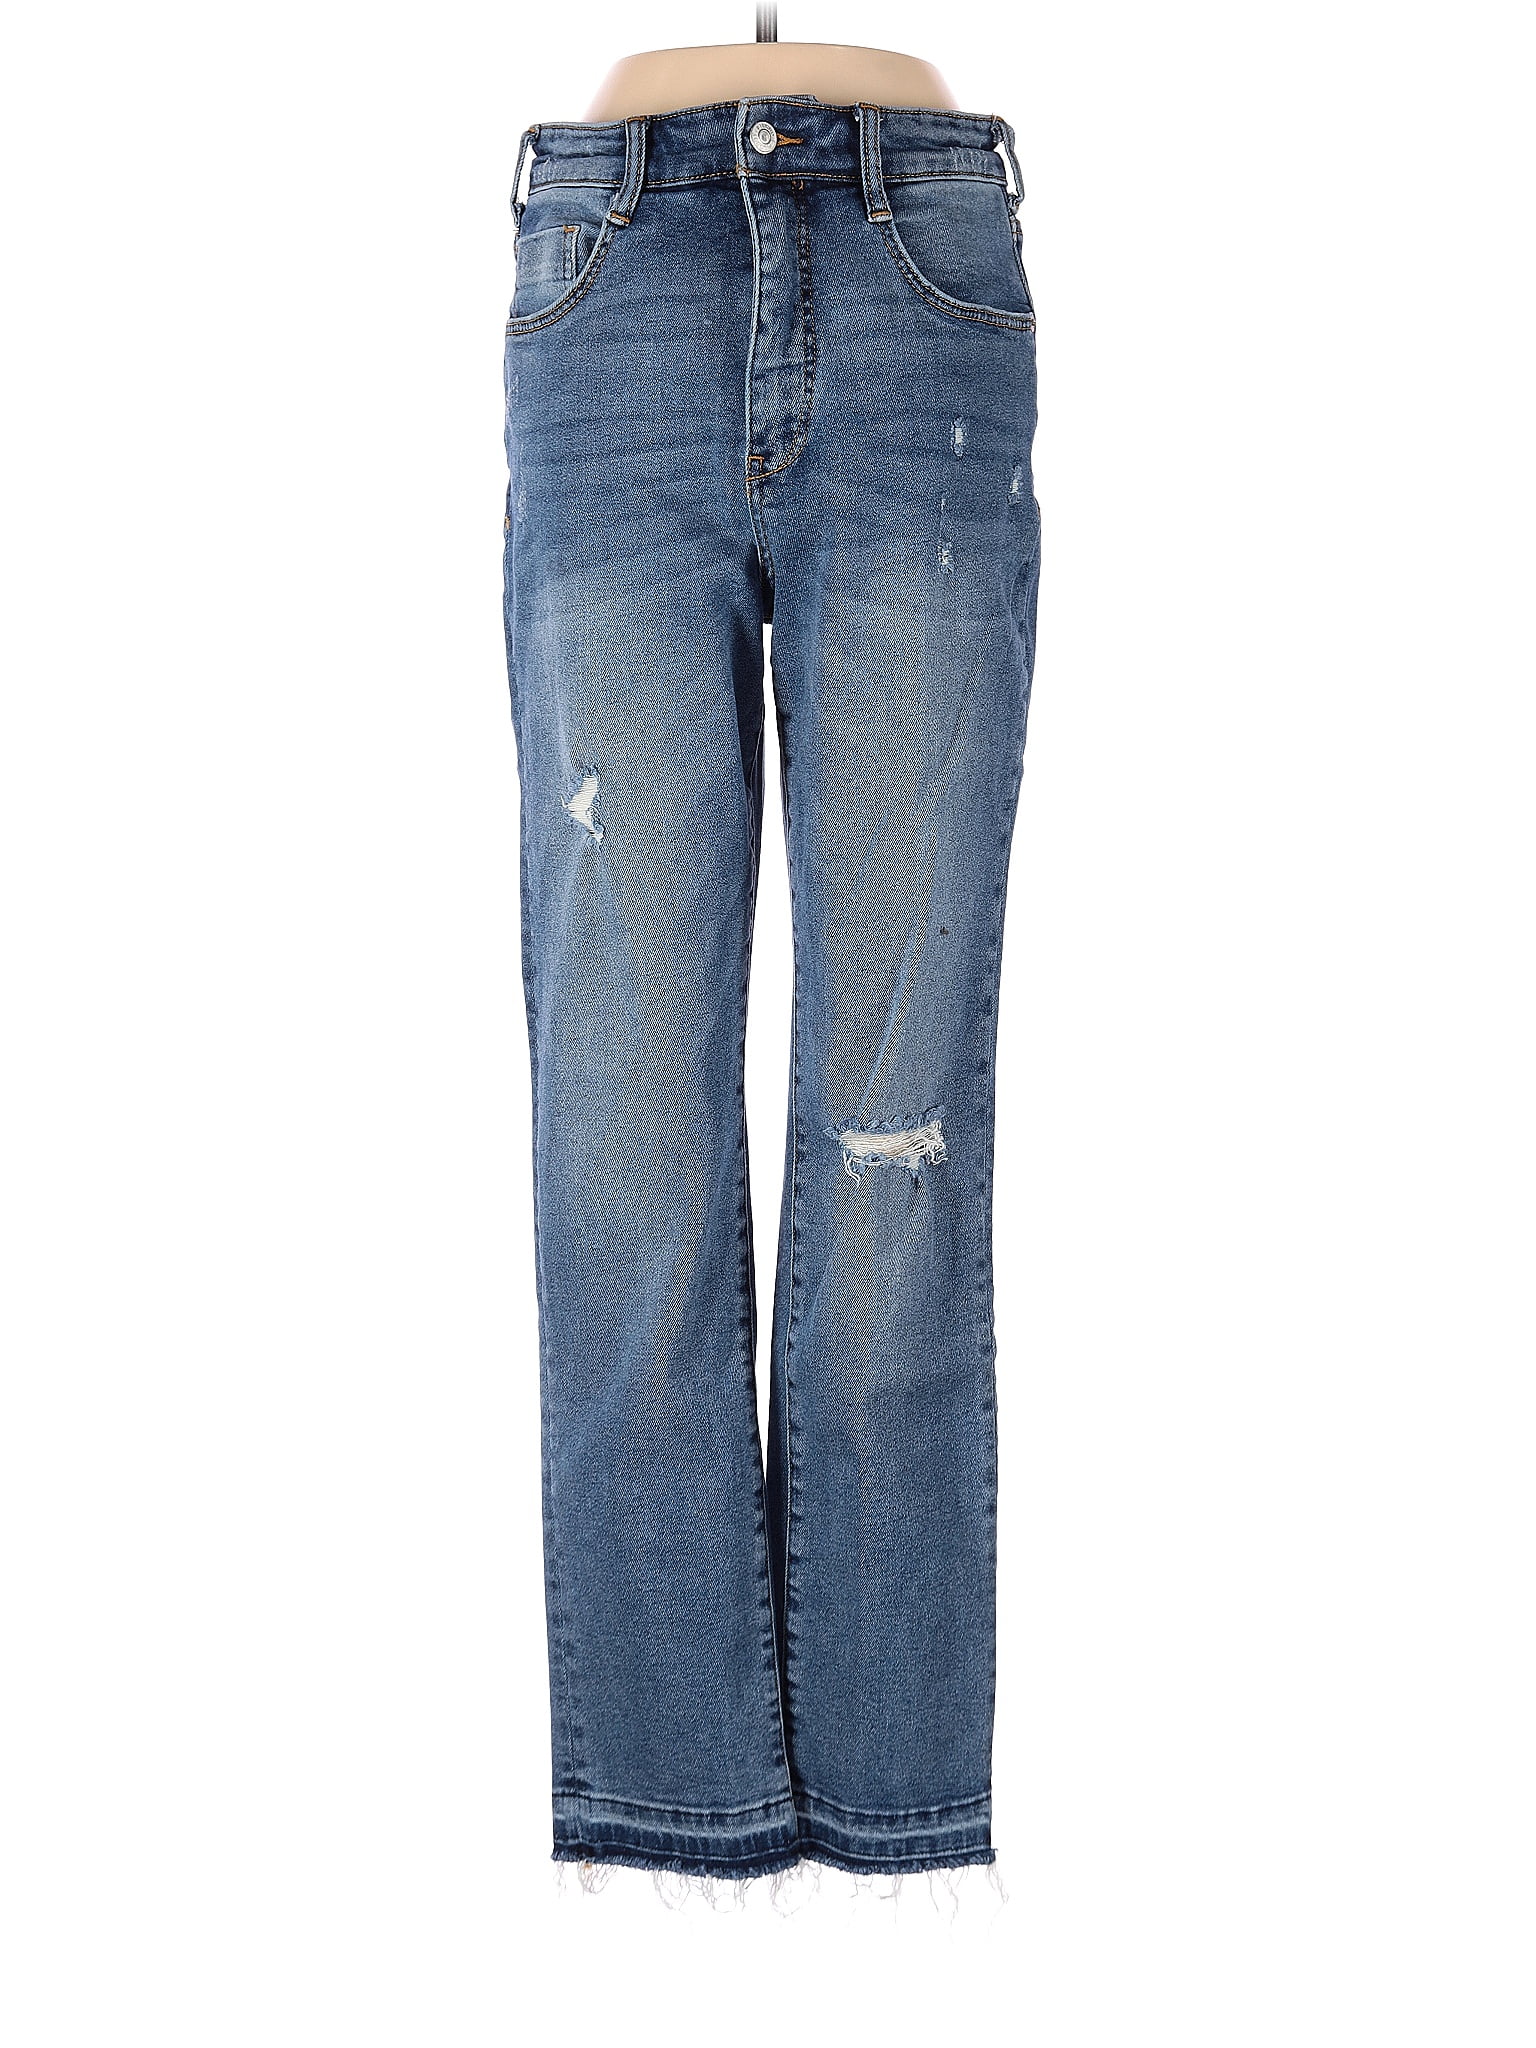 Pilcro Solid Blue Jeans 27 Waist - 70% off | ThredUp